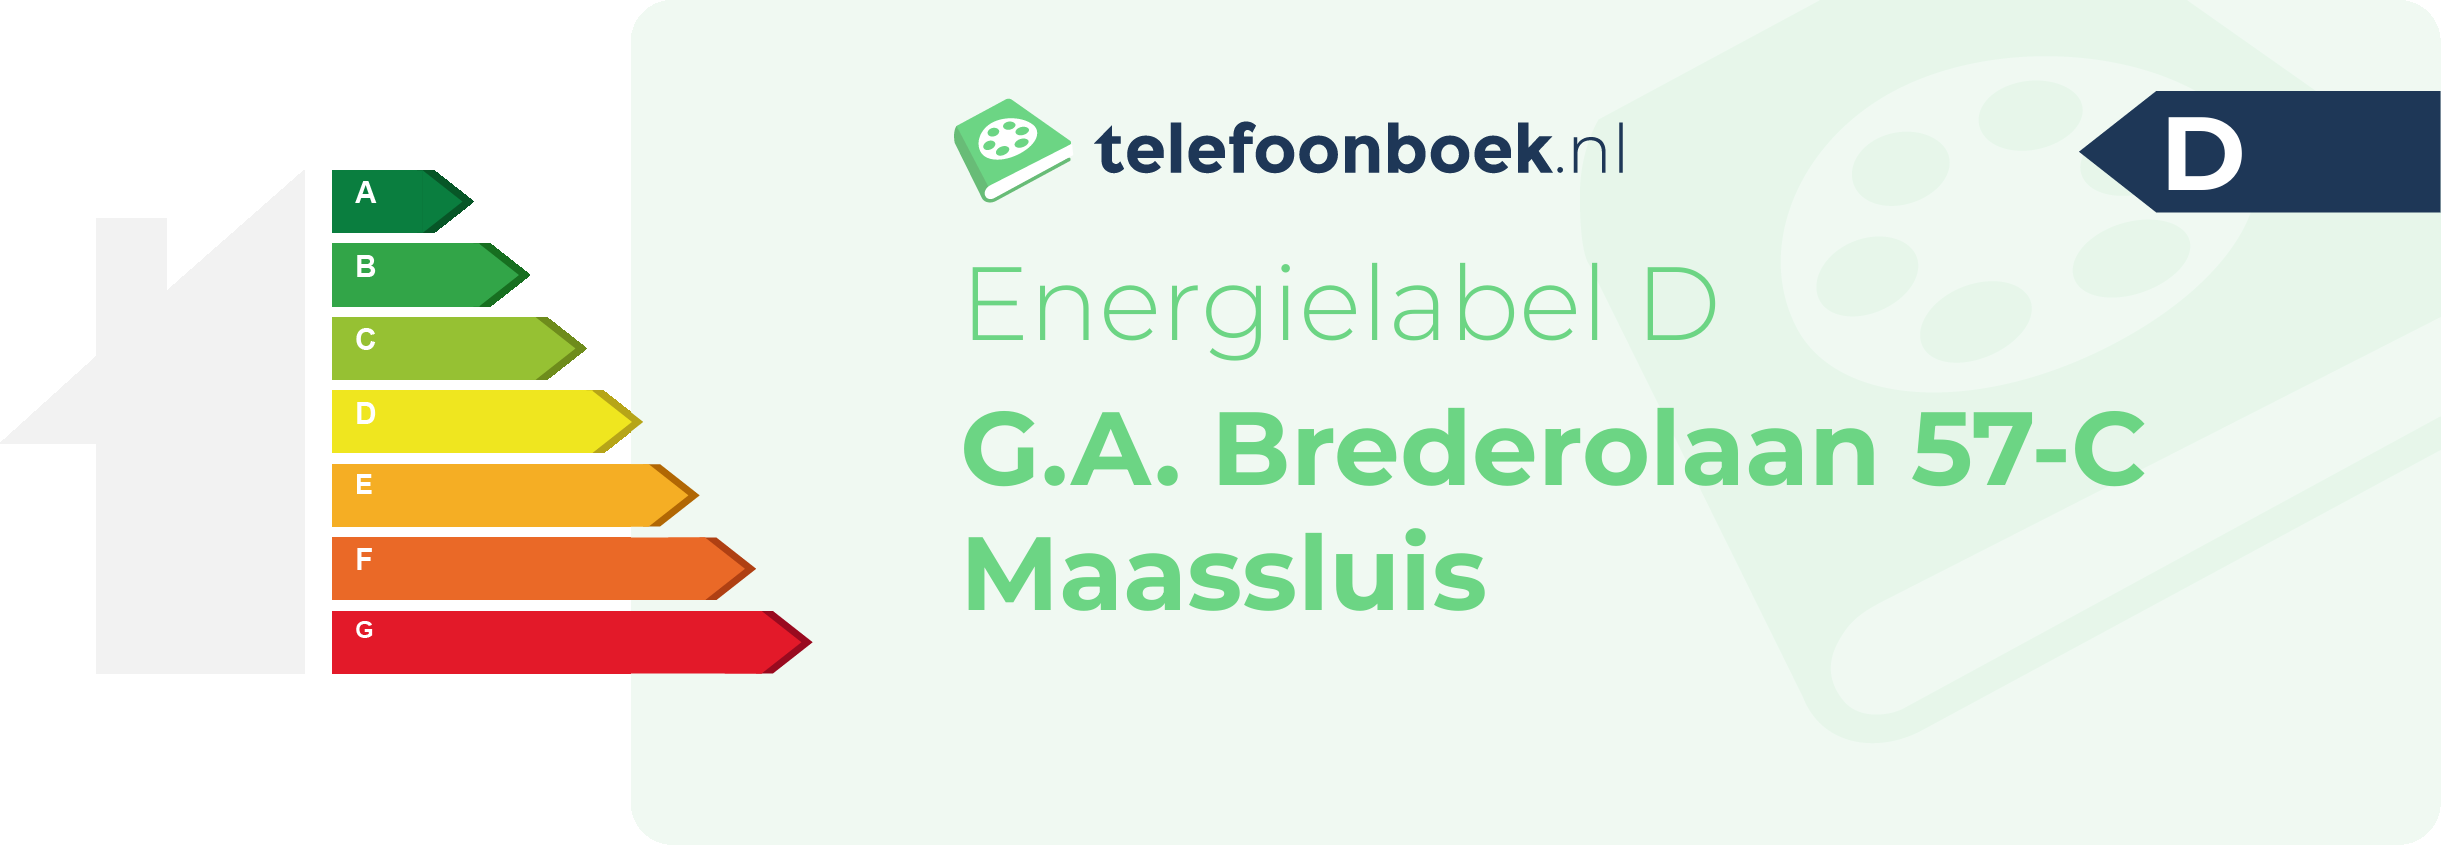 Energielabel G.A. Brederolaan 57-C Maassluis